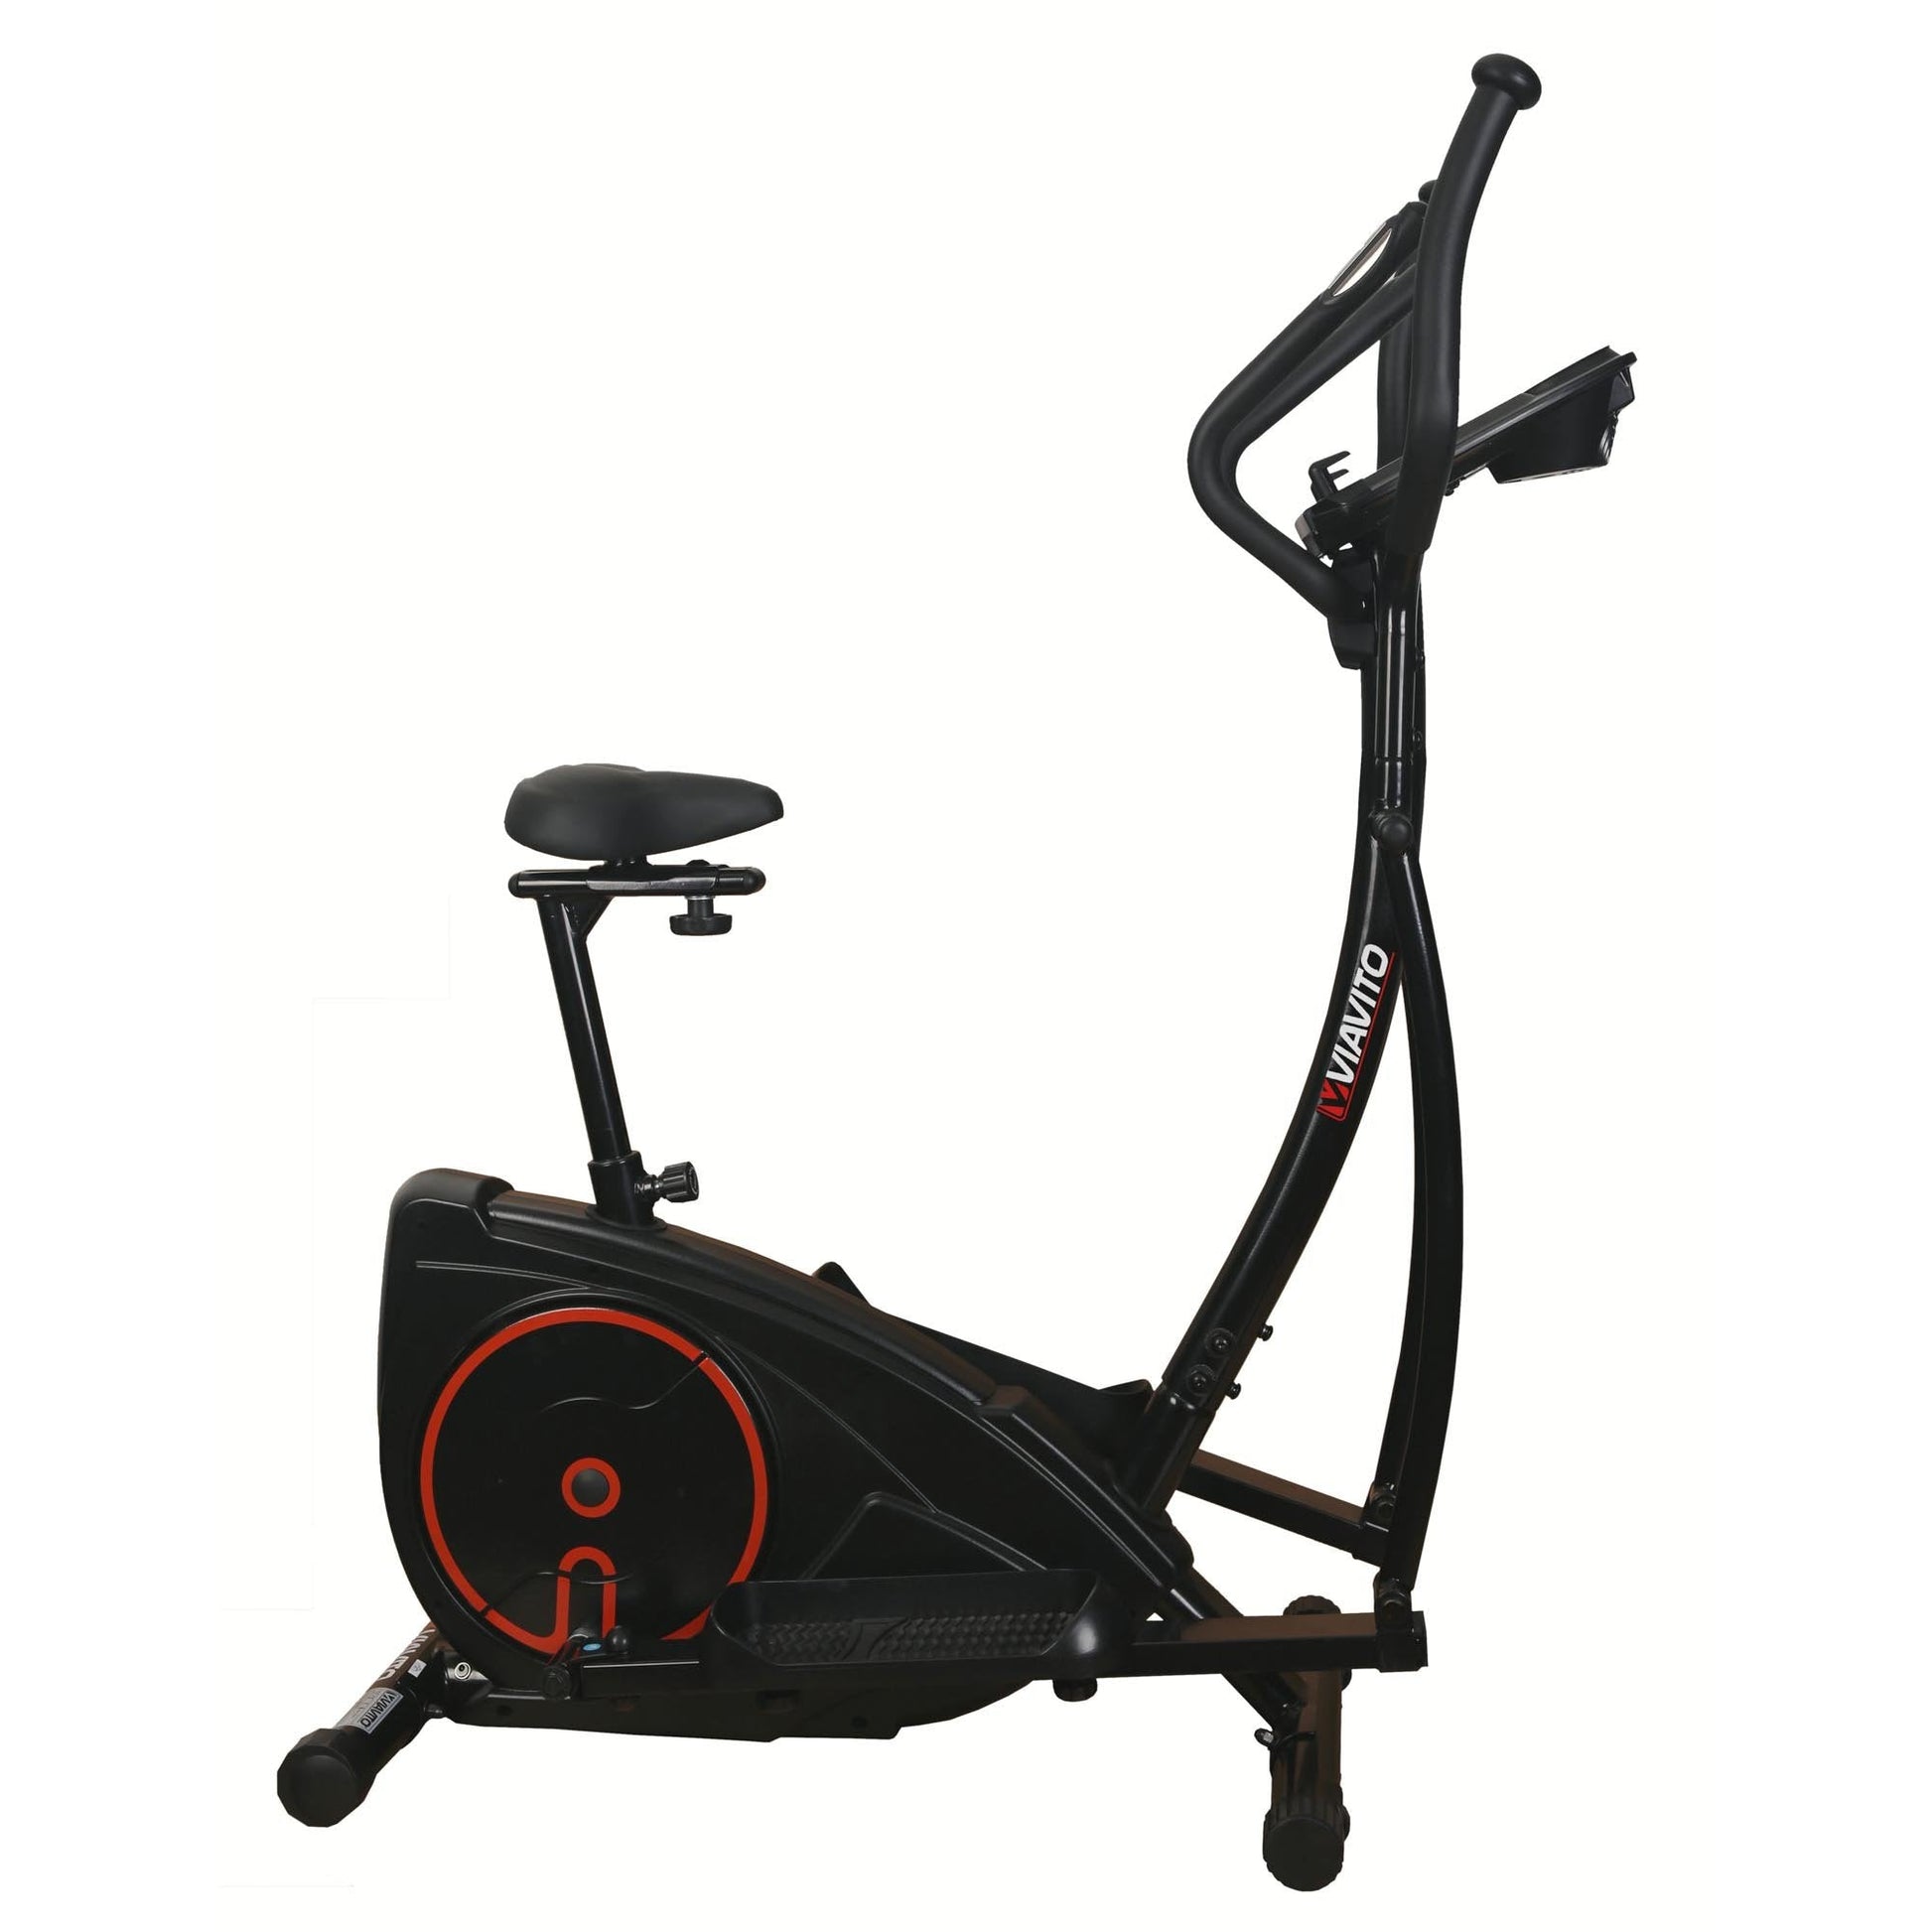 |Viavito Setry 2 in 1 Elliptical Trainer &amp; Exercise Bike - Side|